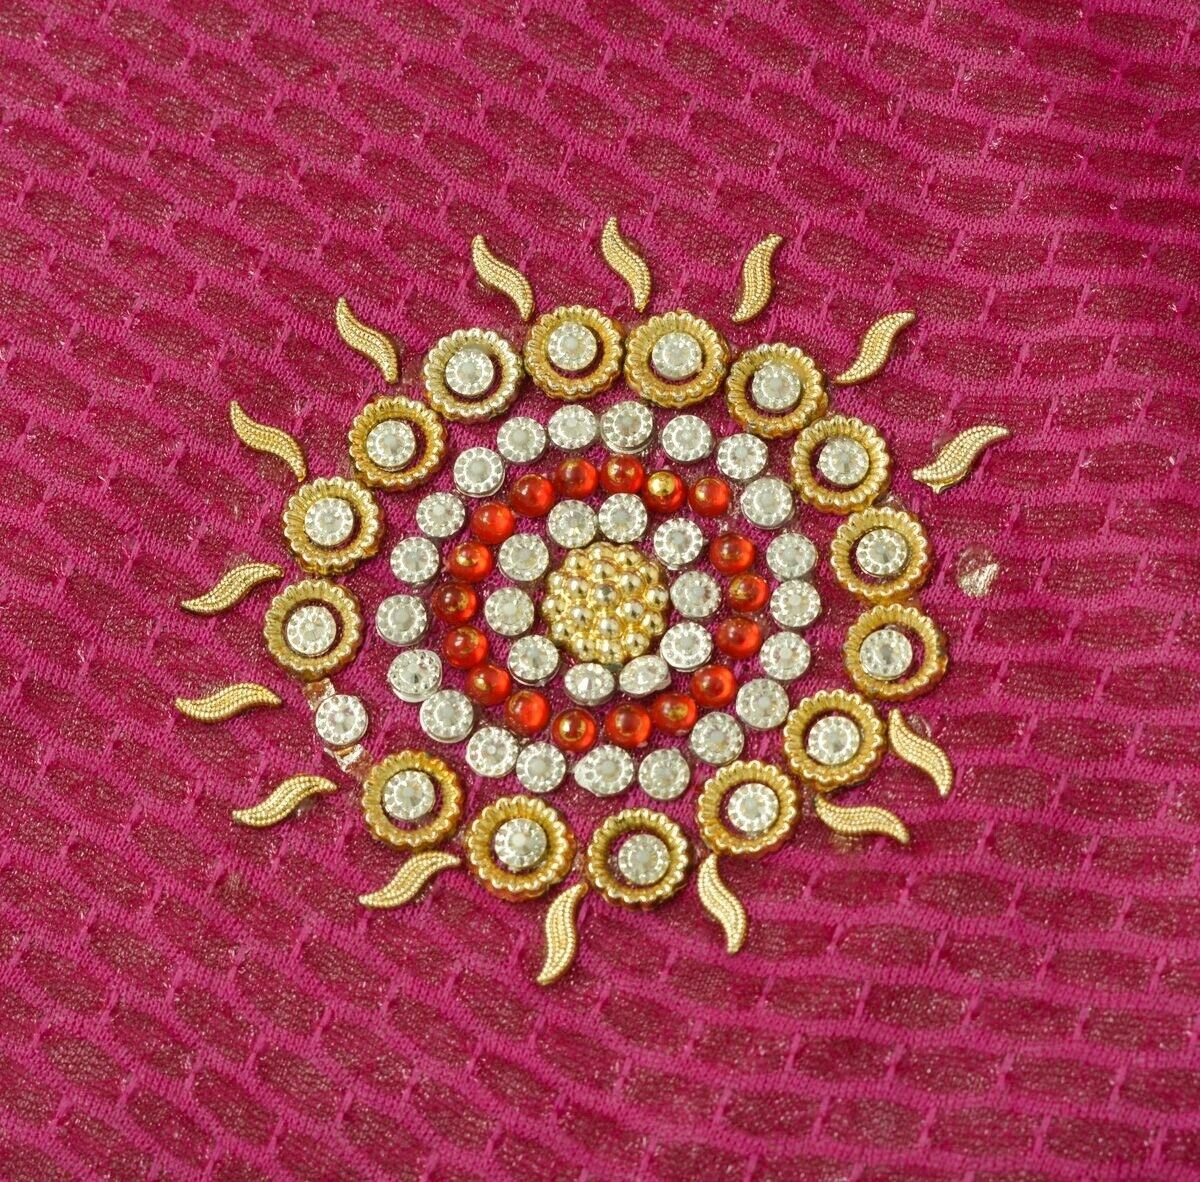 Woven Magenta Vintage Sari Remnant Scrap Net Mesh Fabric for Sewing Craft